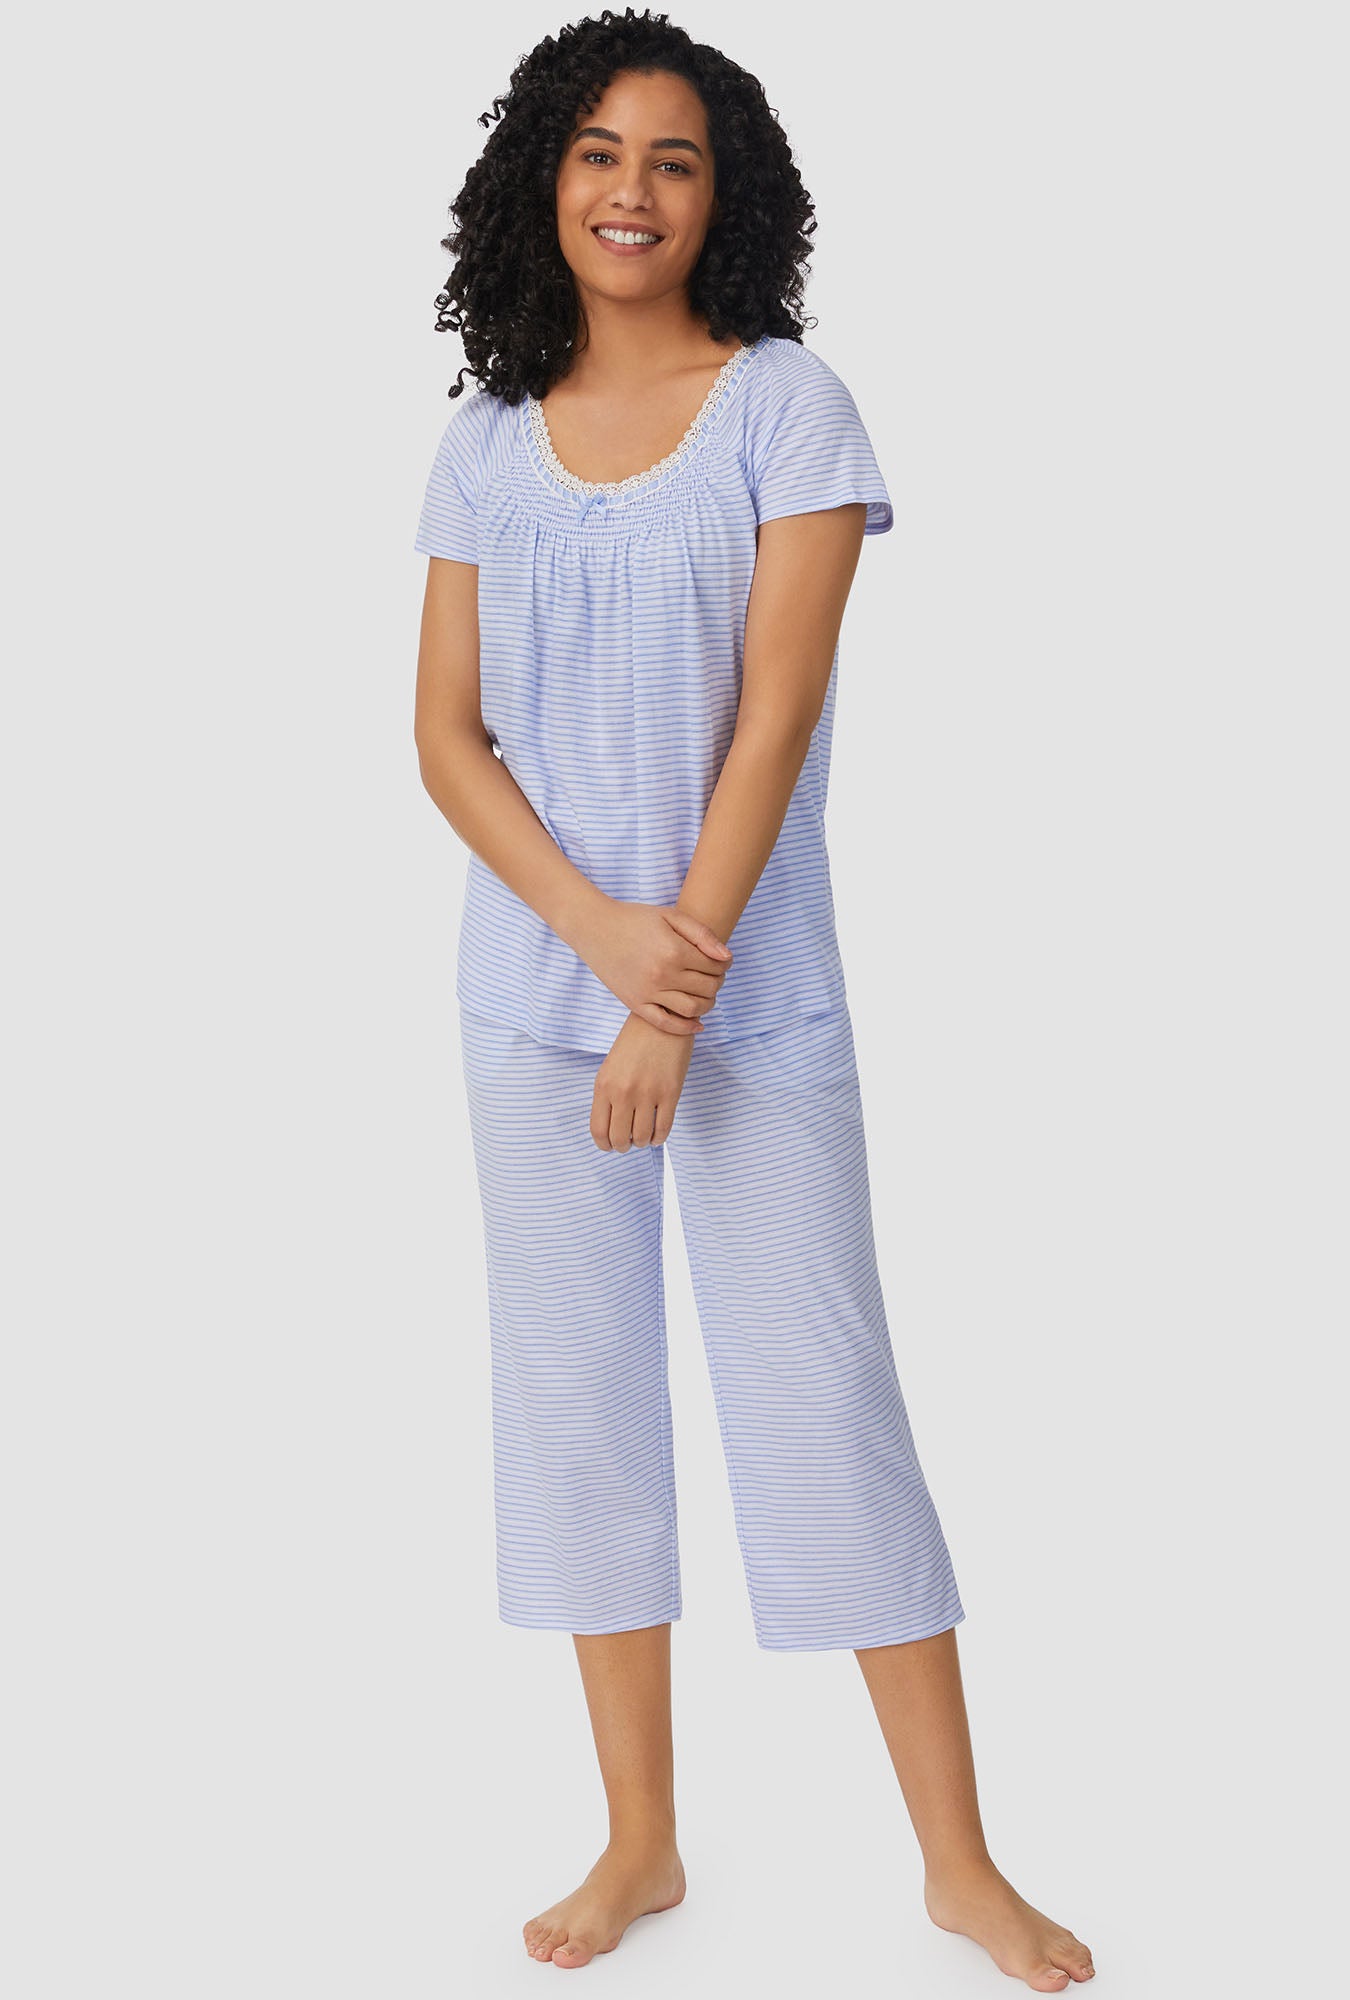 Buy Women's Capri Pajama Set Lace Short Sleeve wear Pjs Sets